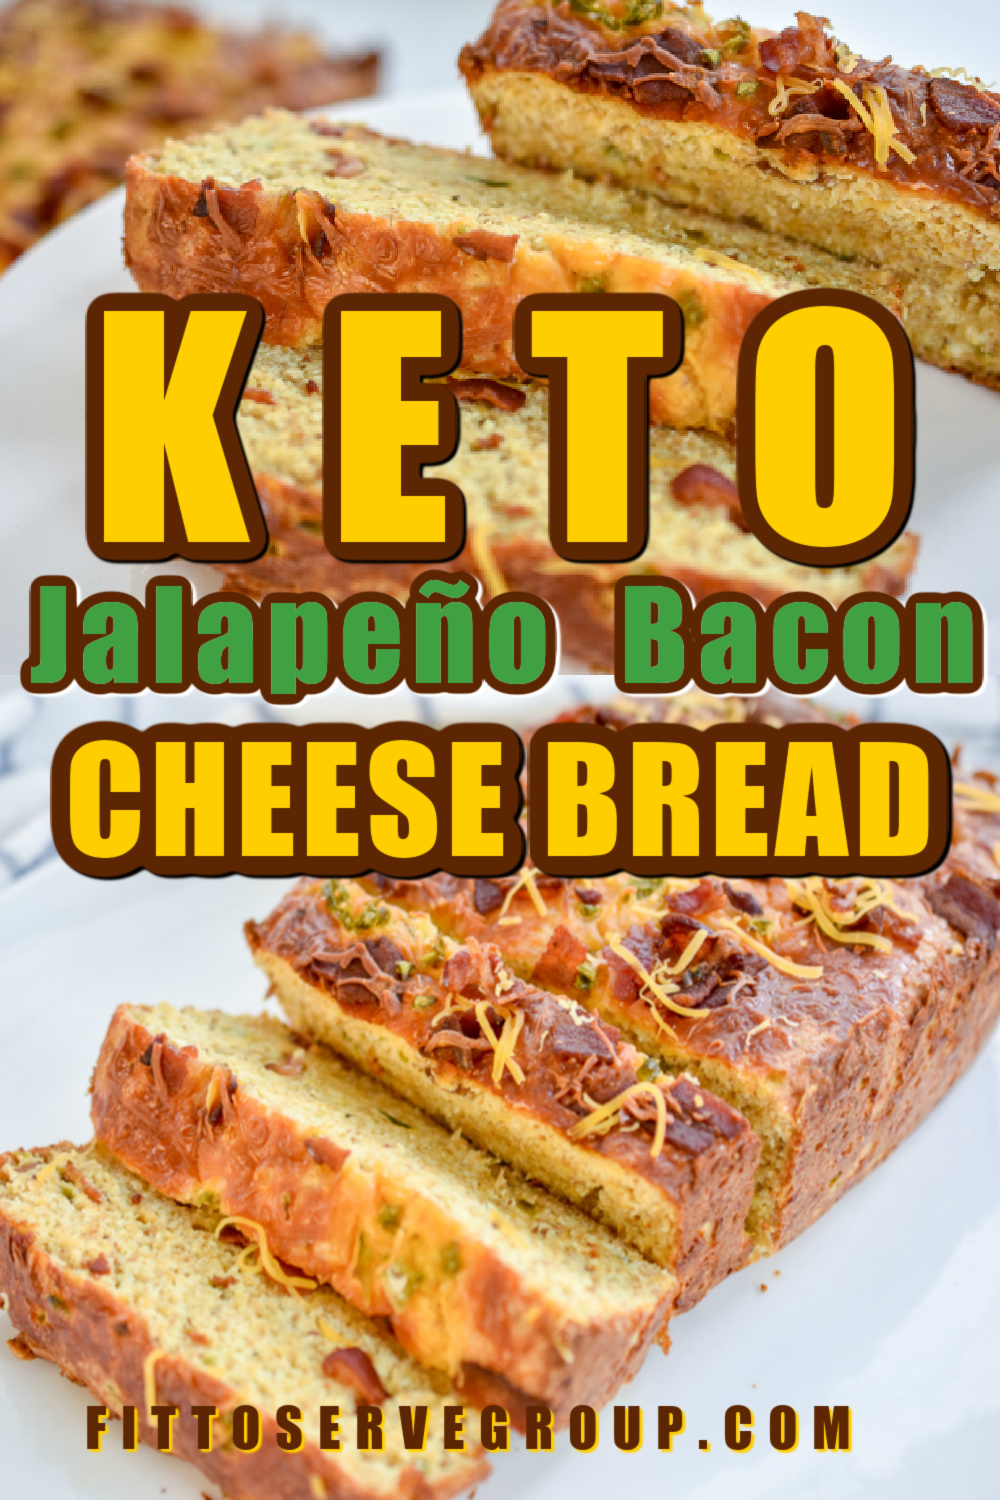 https://www.fittoservegroup.com/wp-content/uploads/2019/06/Keto-jalapeno-bacon-cheese-bread-Pinterest-pin.jpg